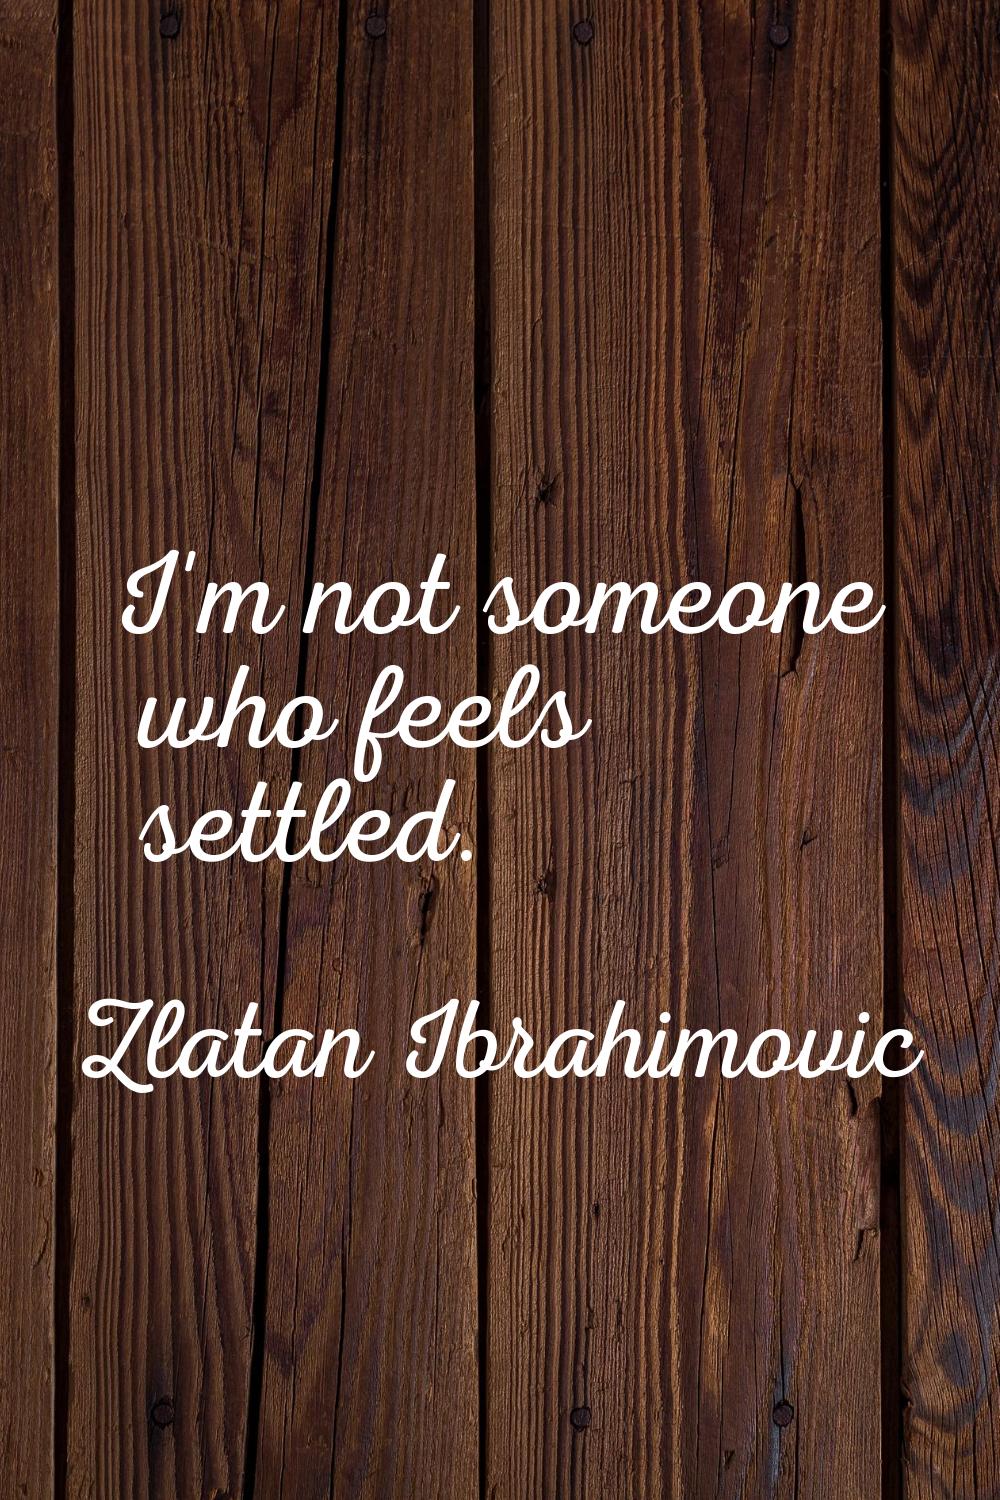 I'm not someone who feels settled.